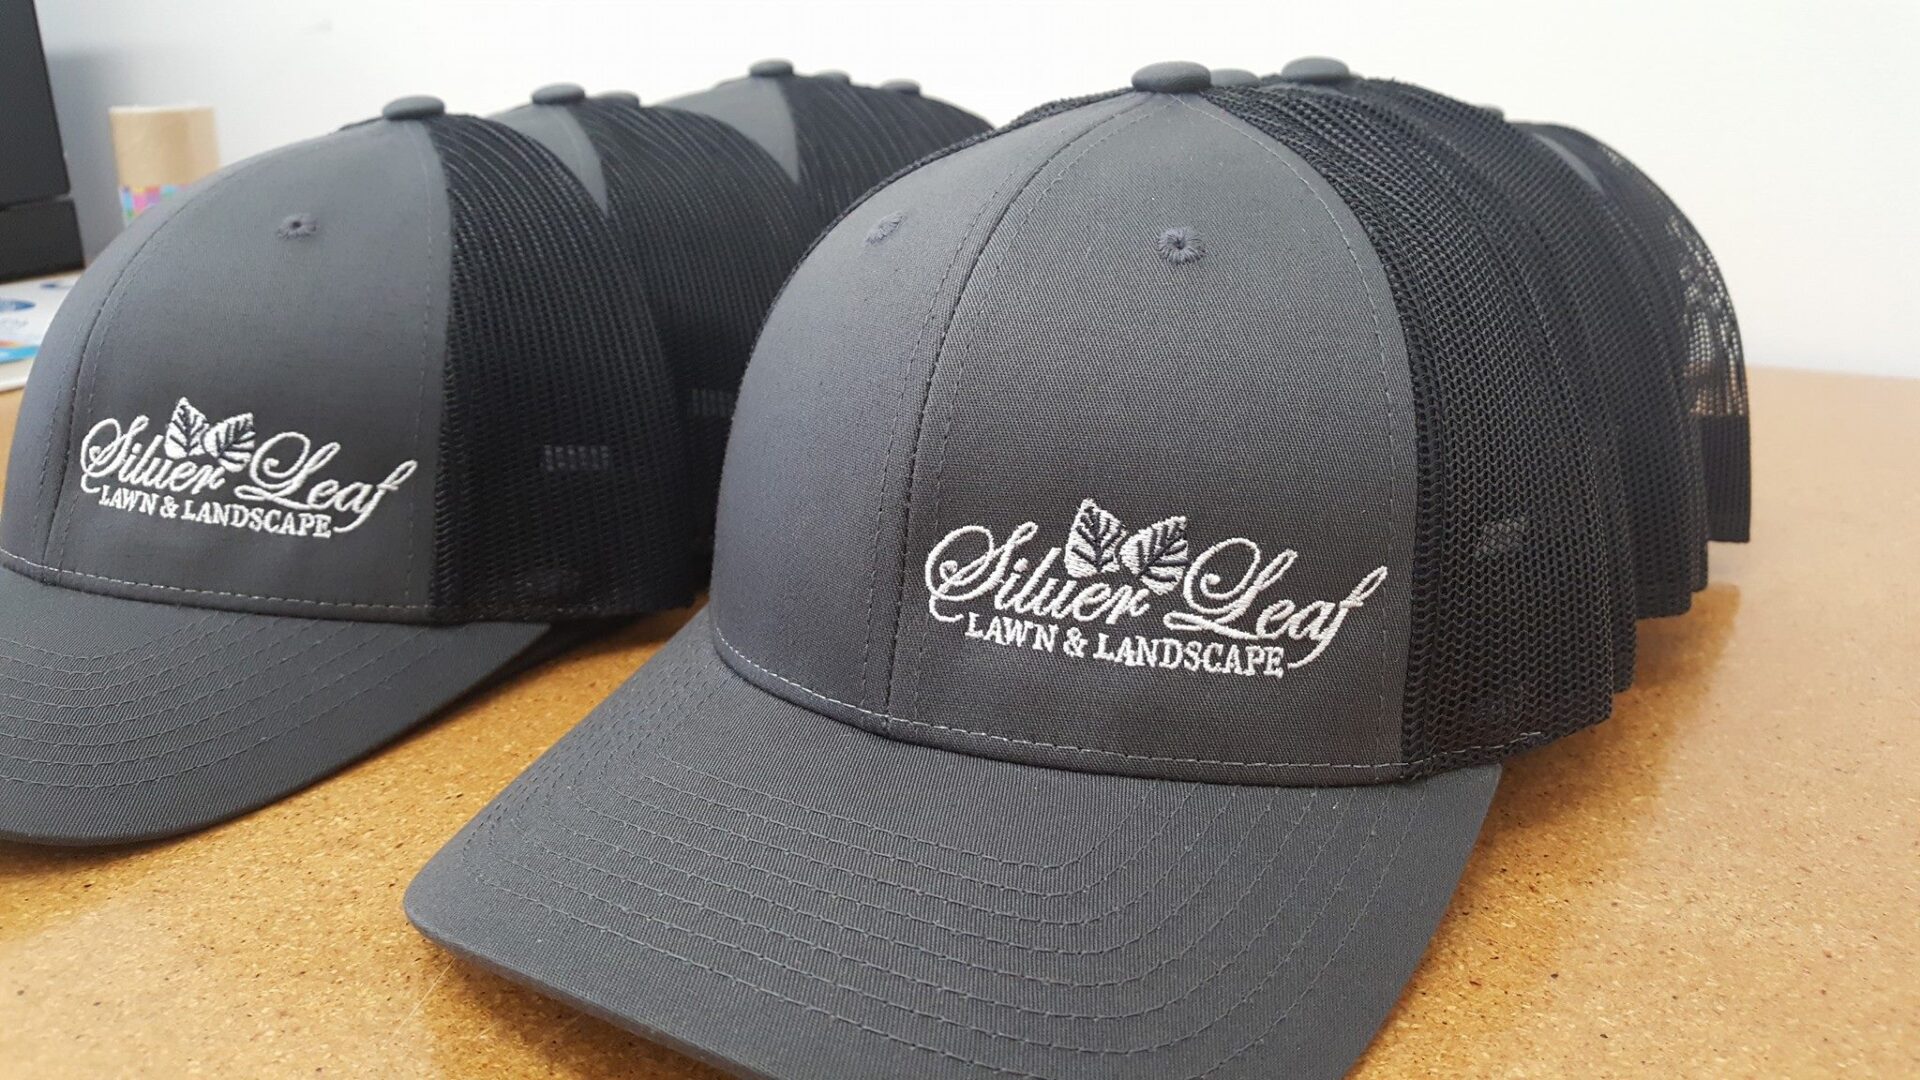 Silver Leaf Lawn and Landscape logo printed on black caps